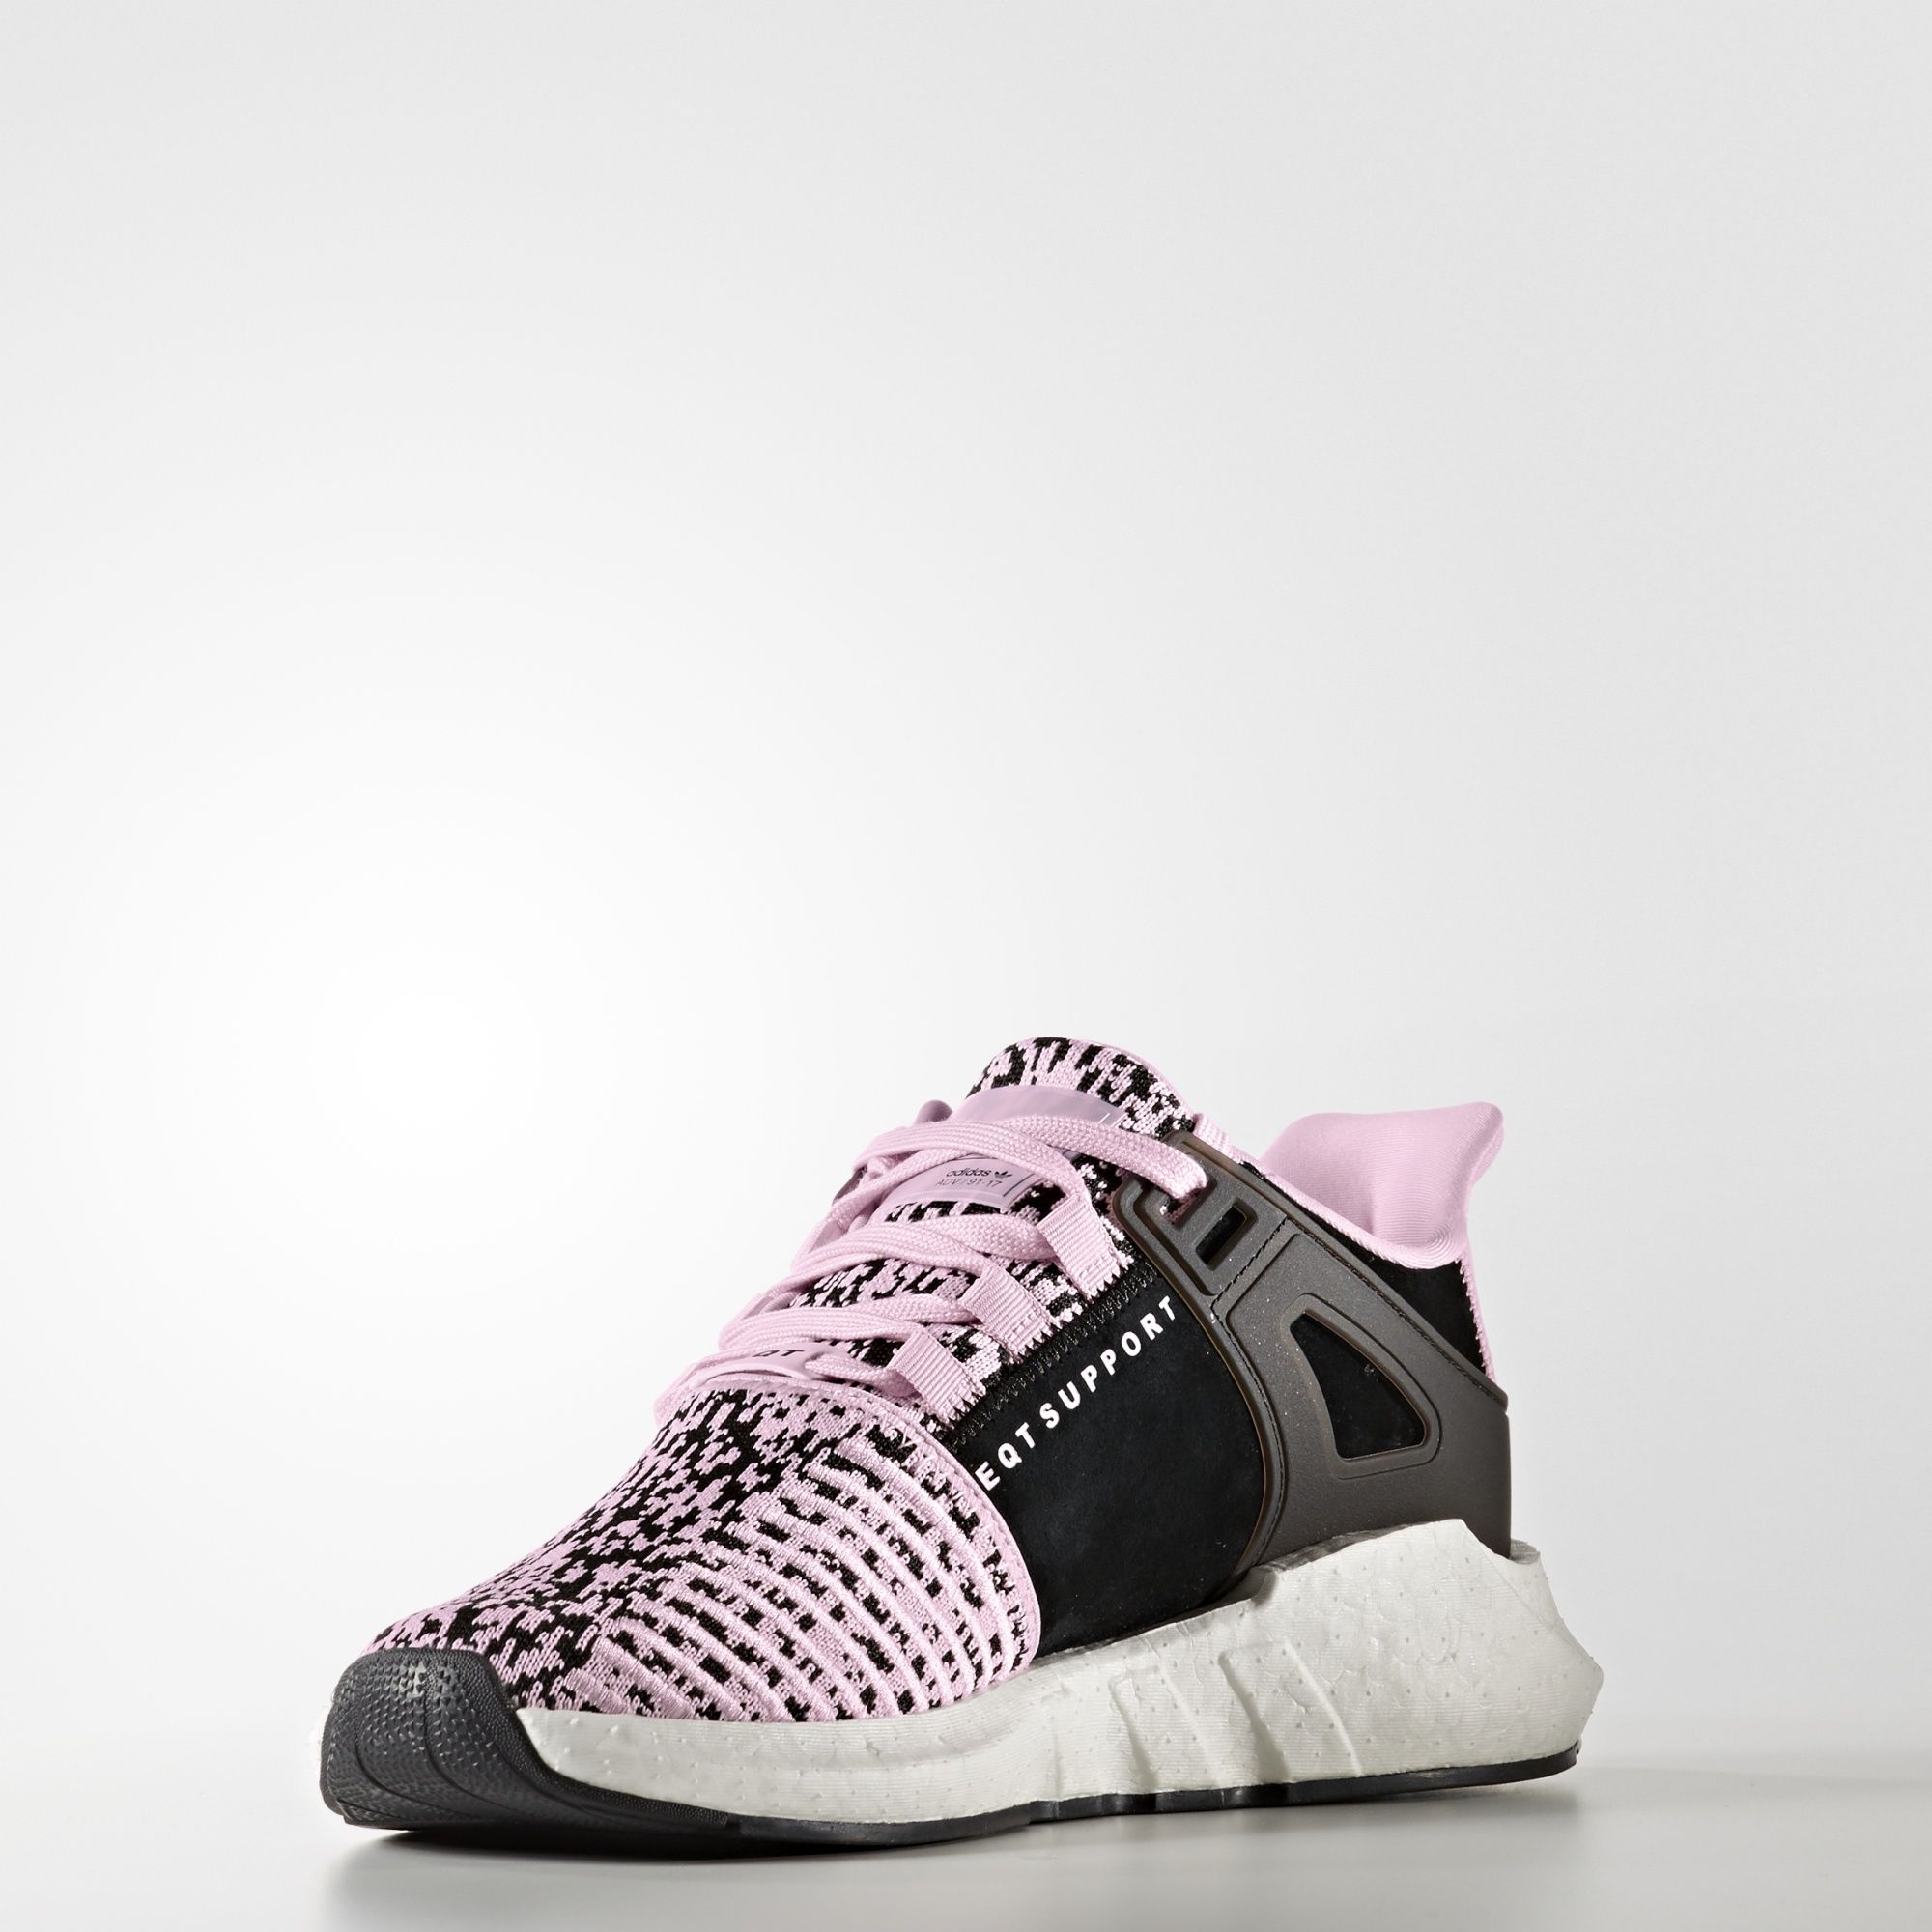 adidas-eqt-support-9317-wonder-pink-glitch-3